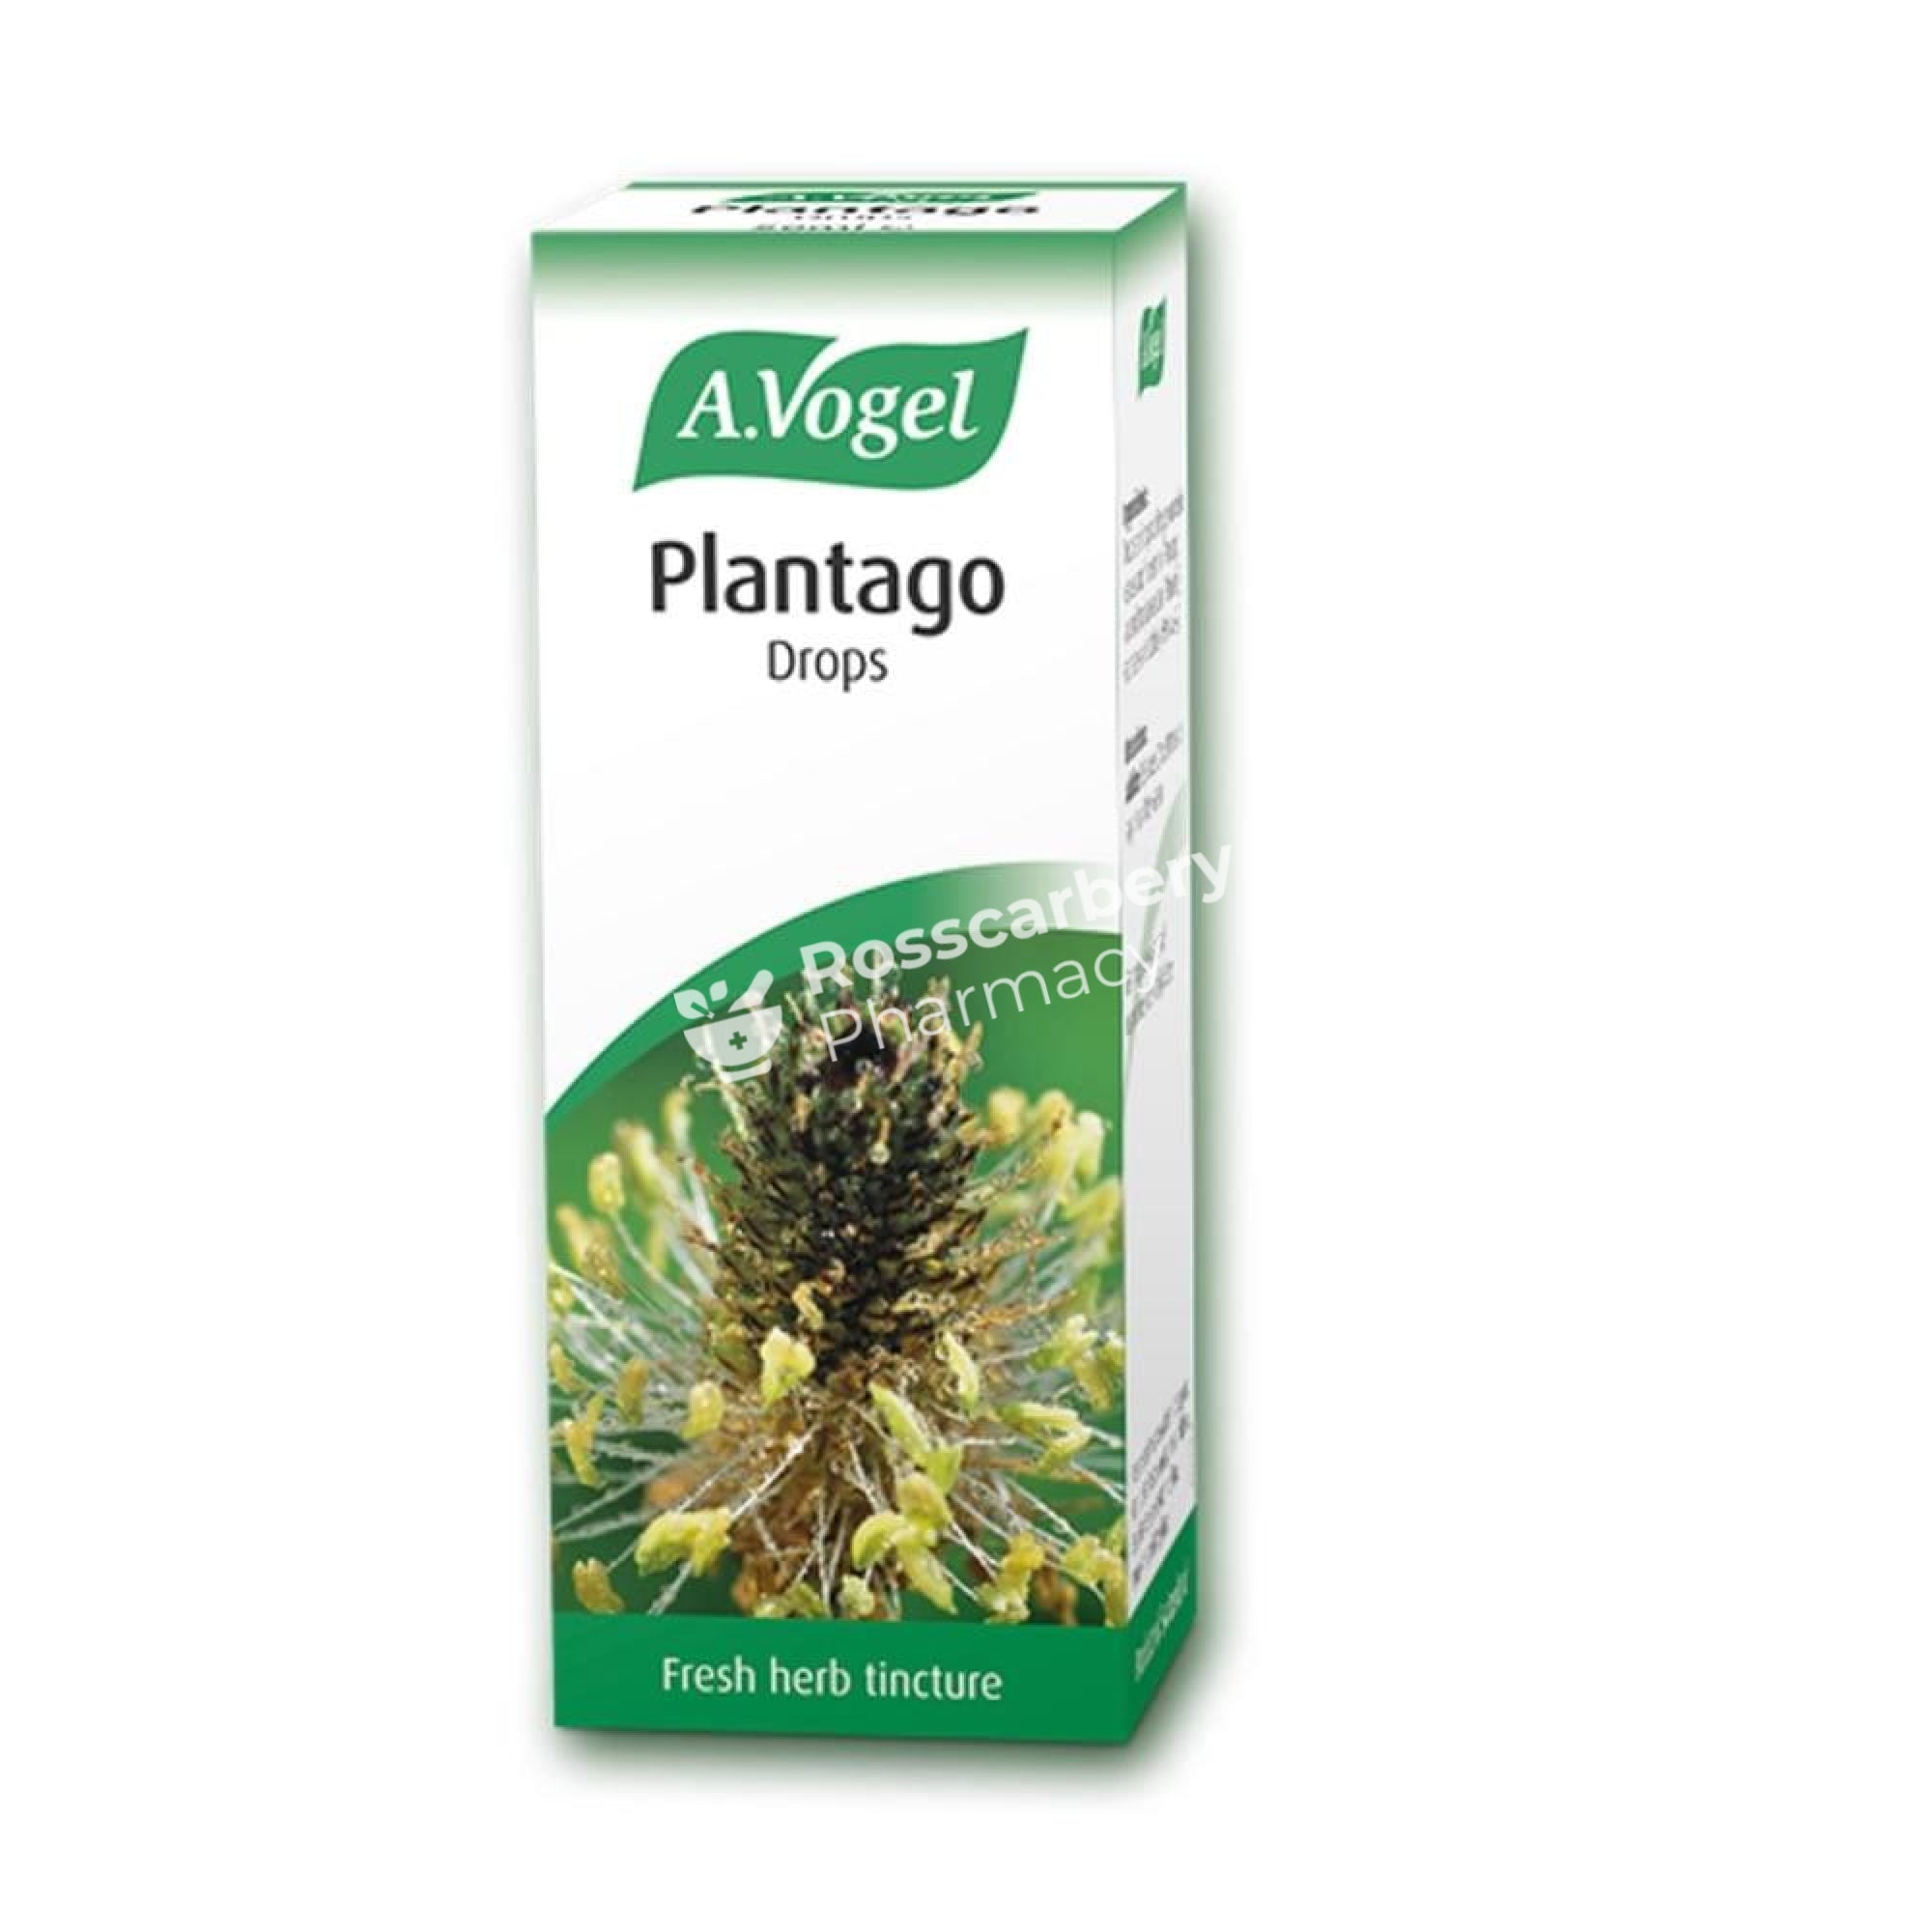 A Vogel Plantago Drops Herbal & Traditional Remedies